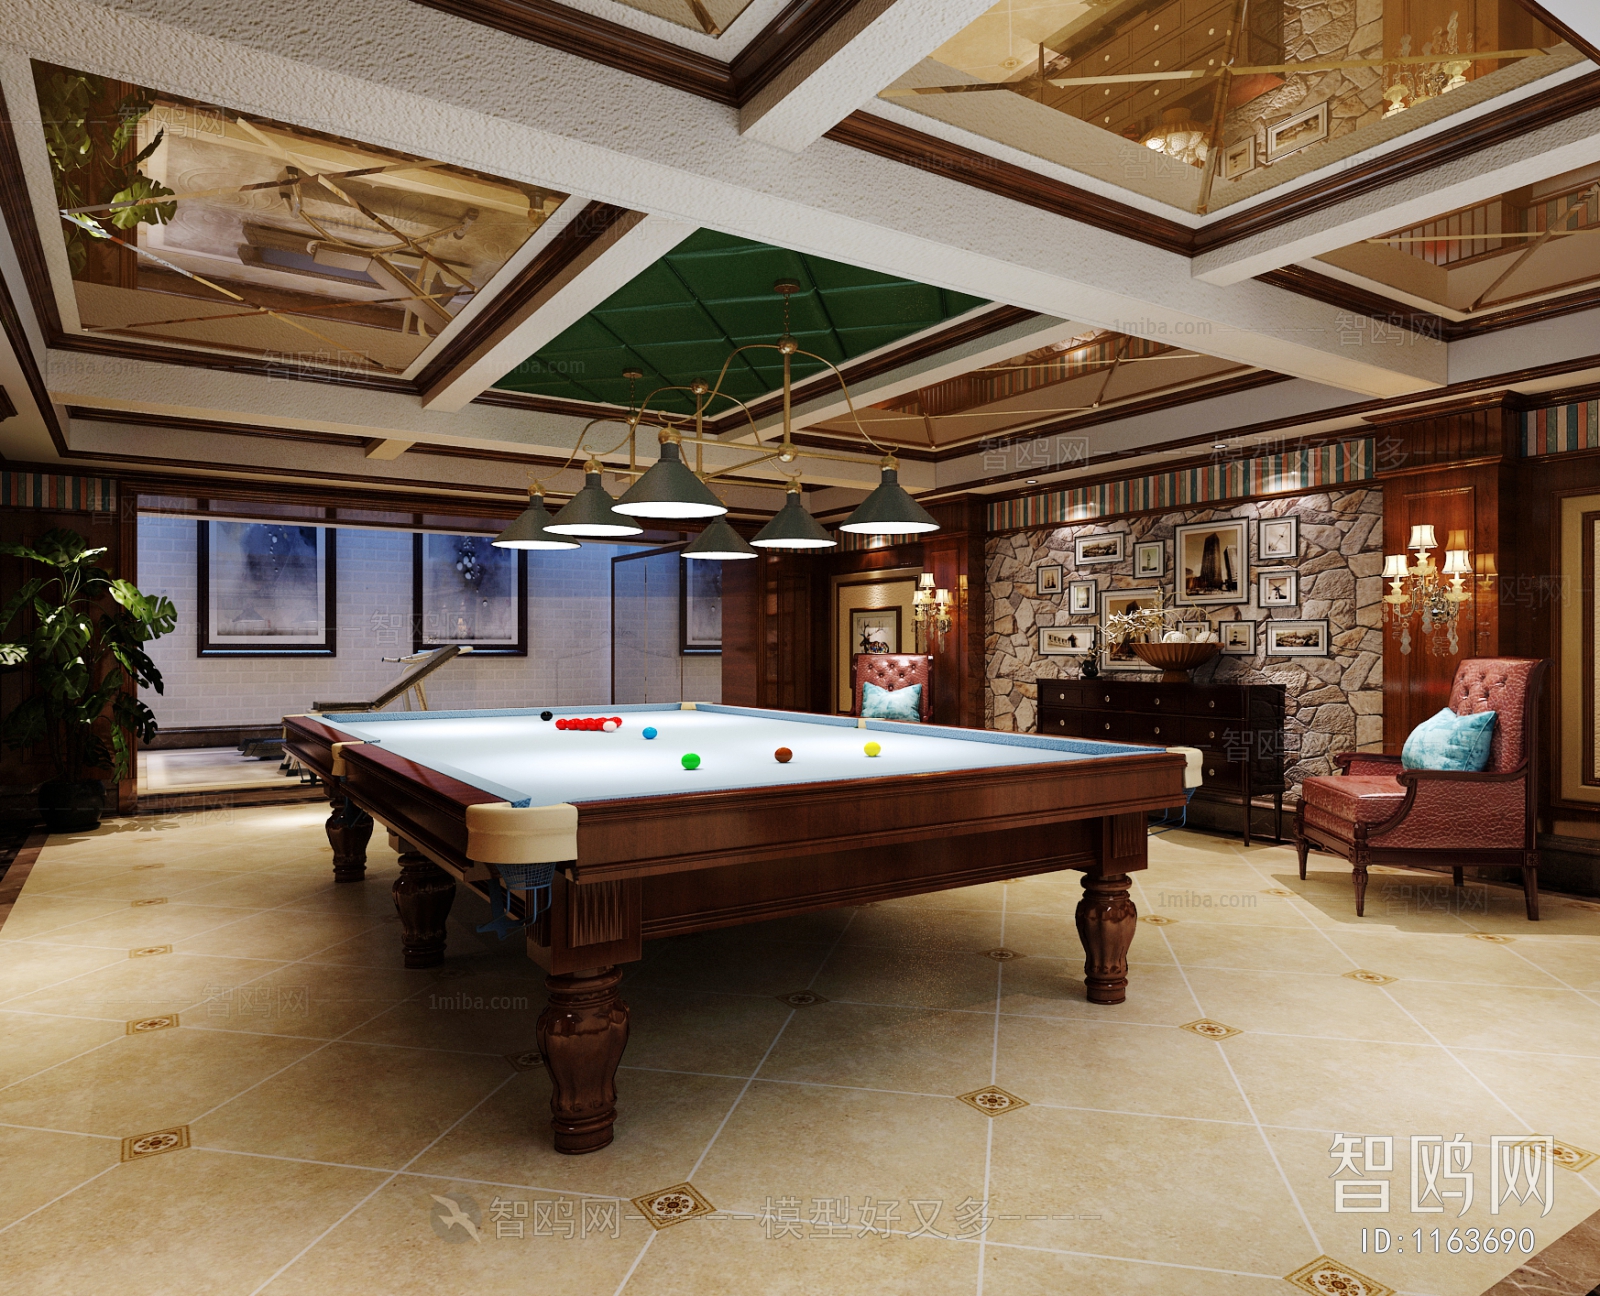 American Style Billiards Room